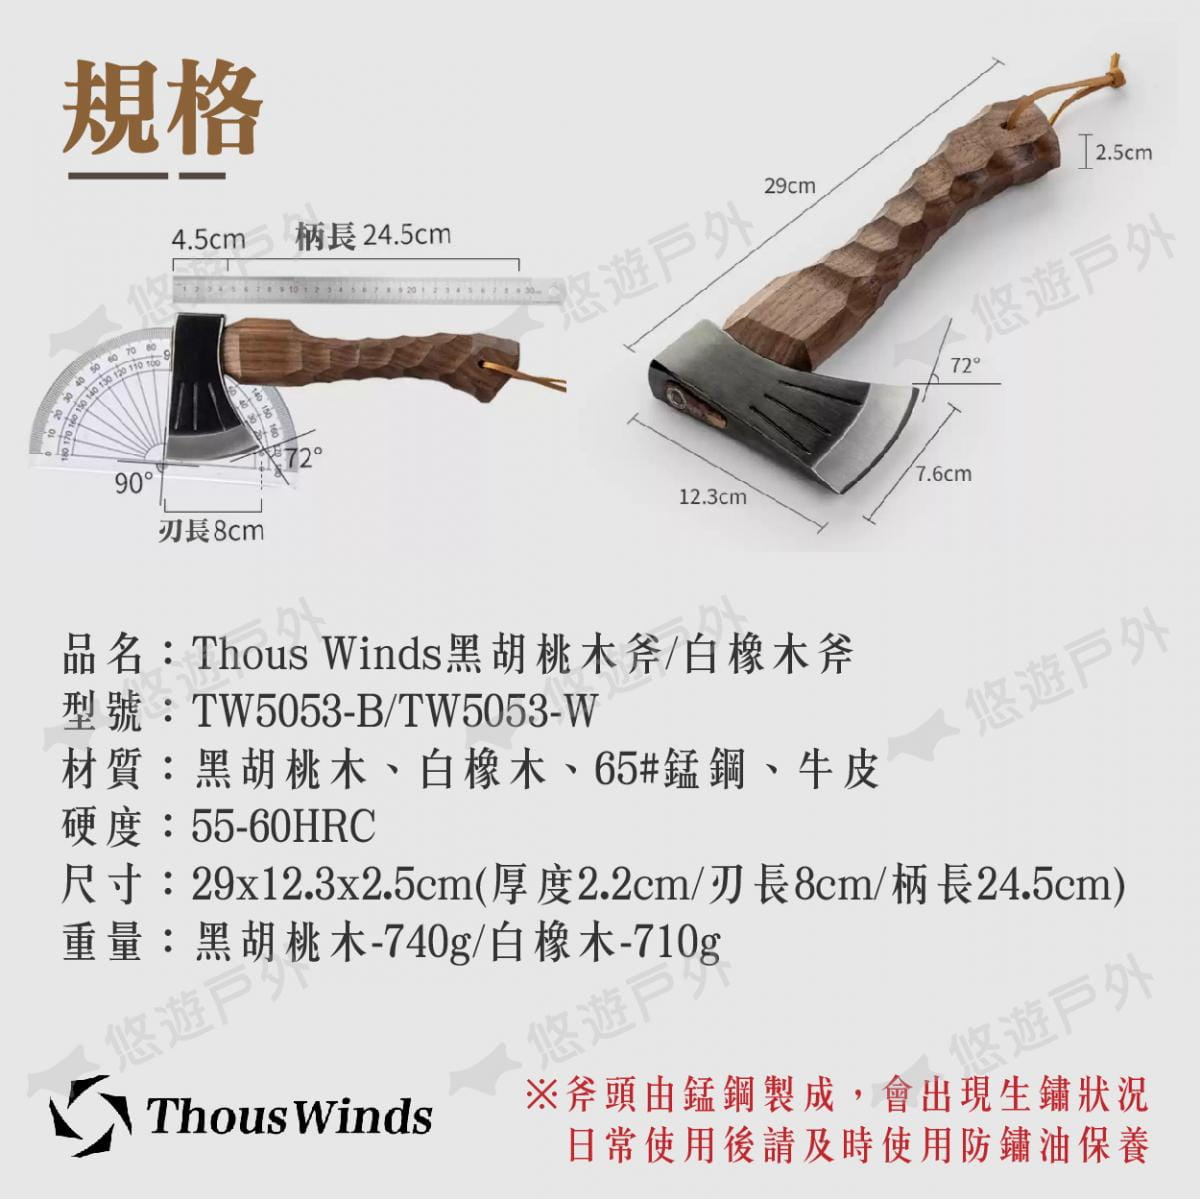 【Thous Winds】白橡木錳鋼斧 TW5053-W (悠遊戶外) 8